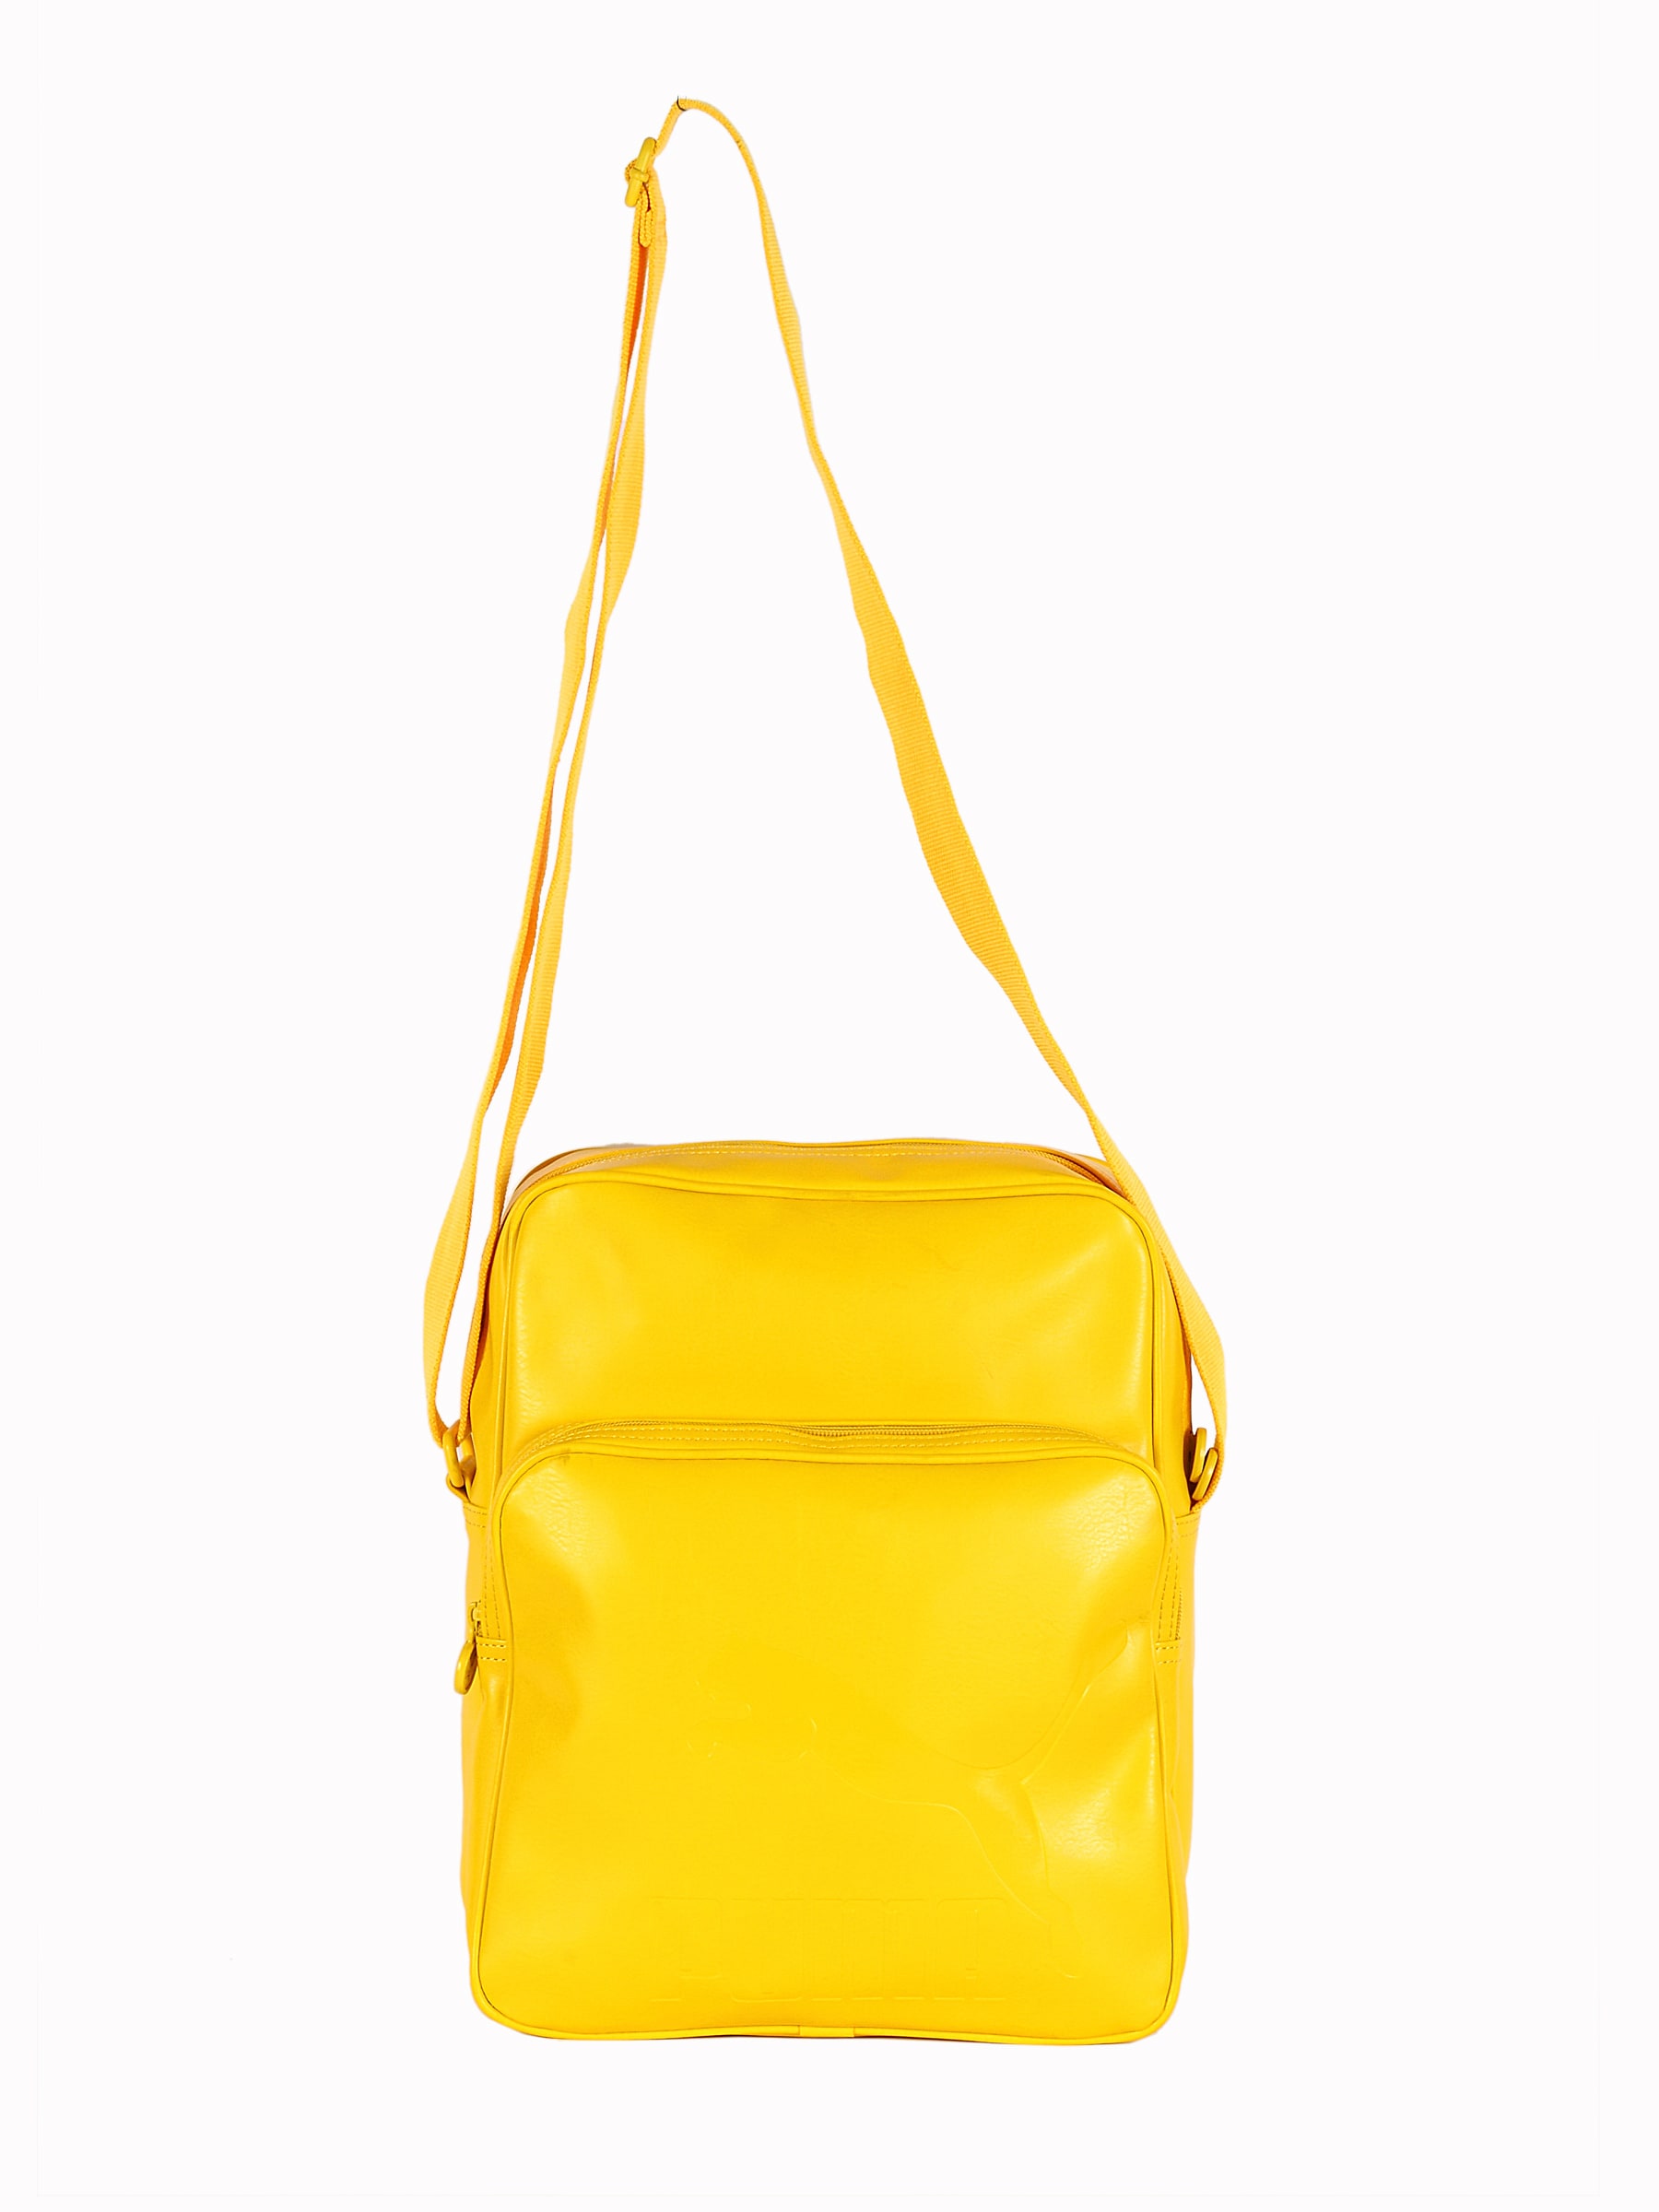 Puma Unisex Yellow Sling Bag